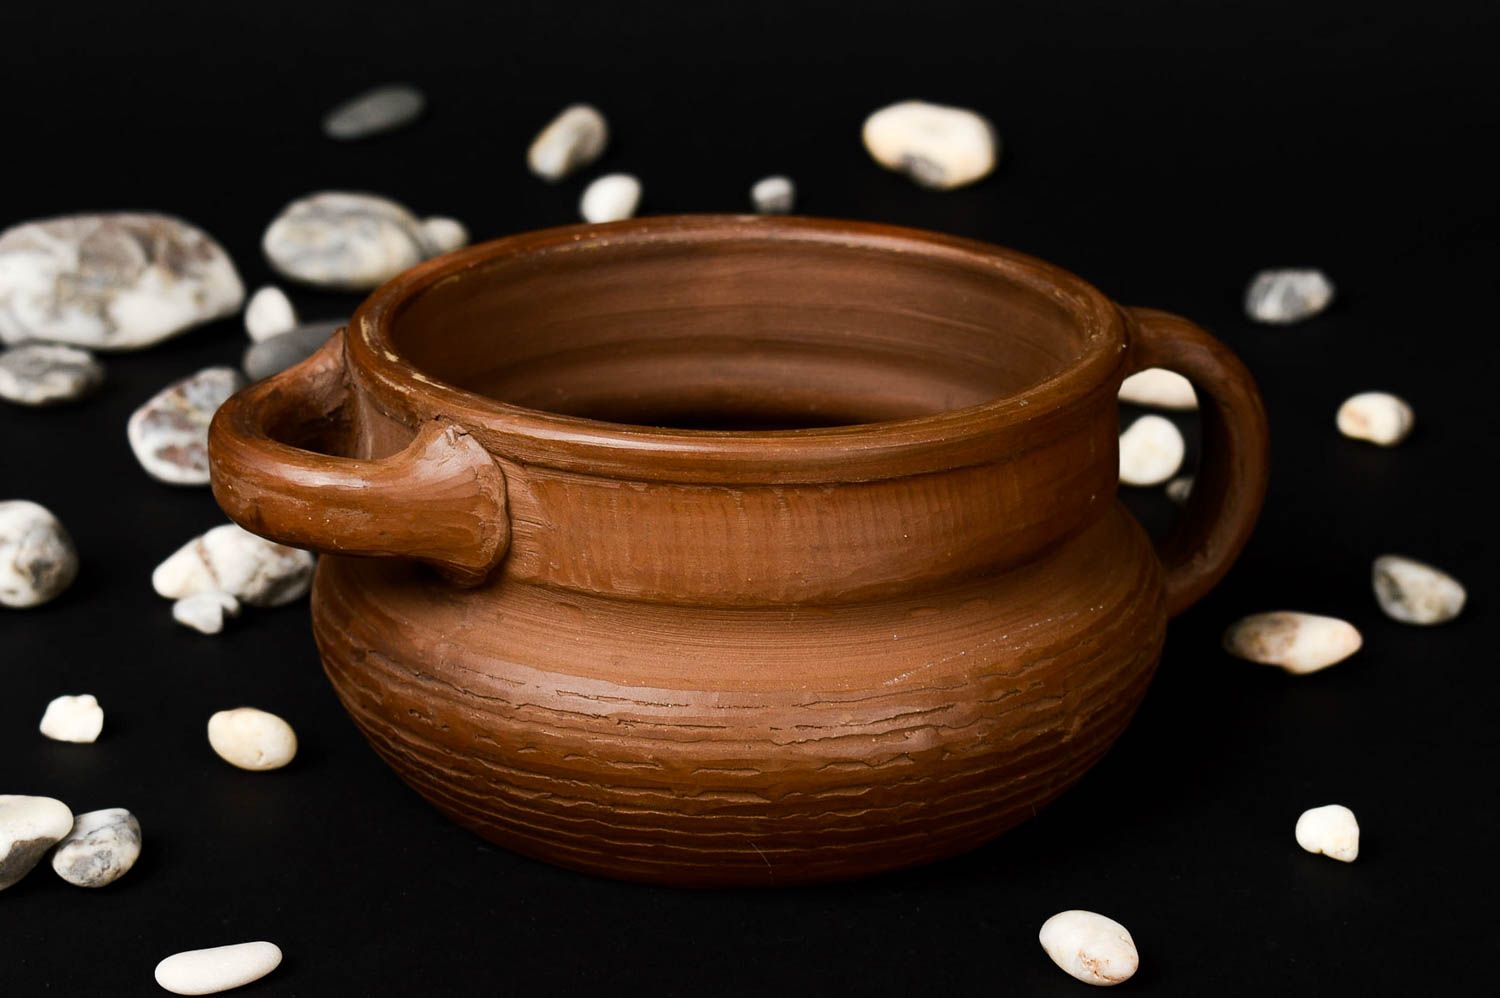 Handmade pottery ceramic tableware handmade cookware ceramic product gift ideas photo 1